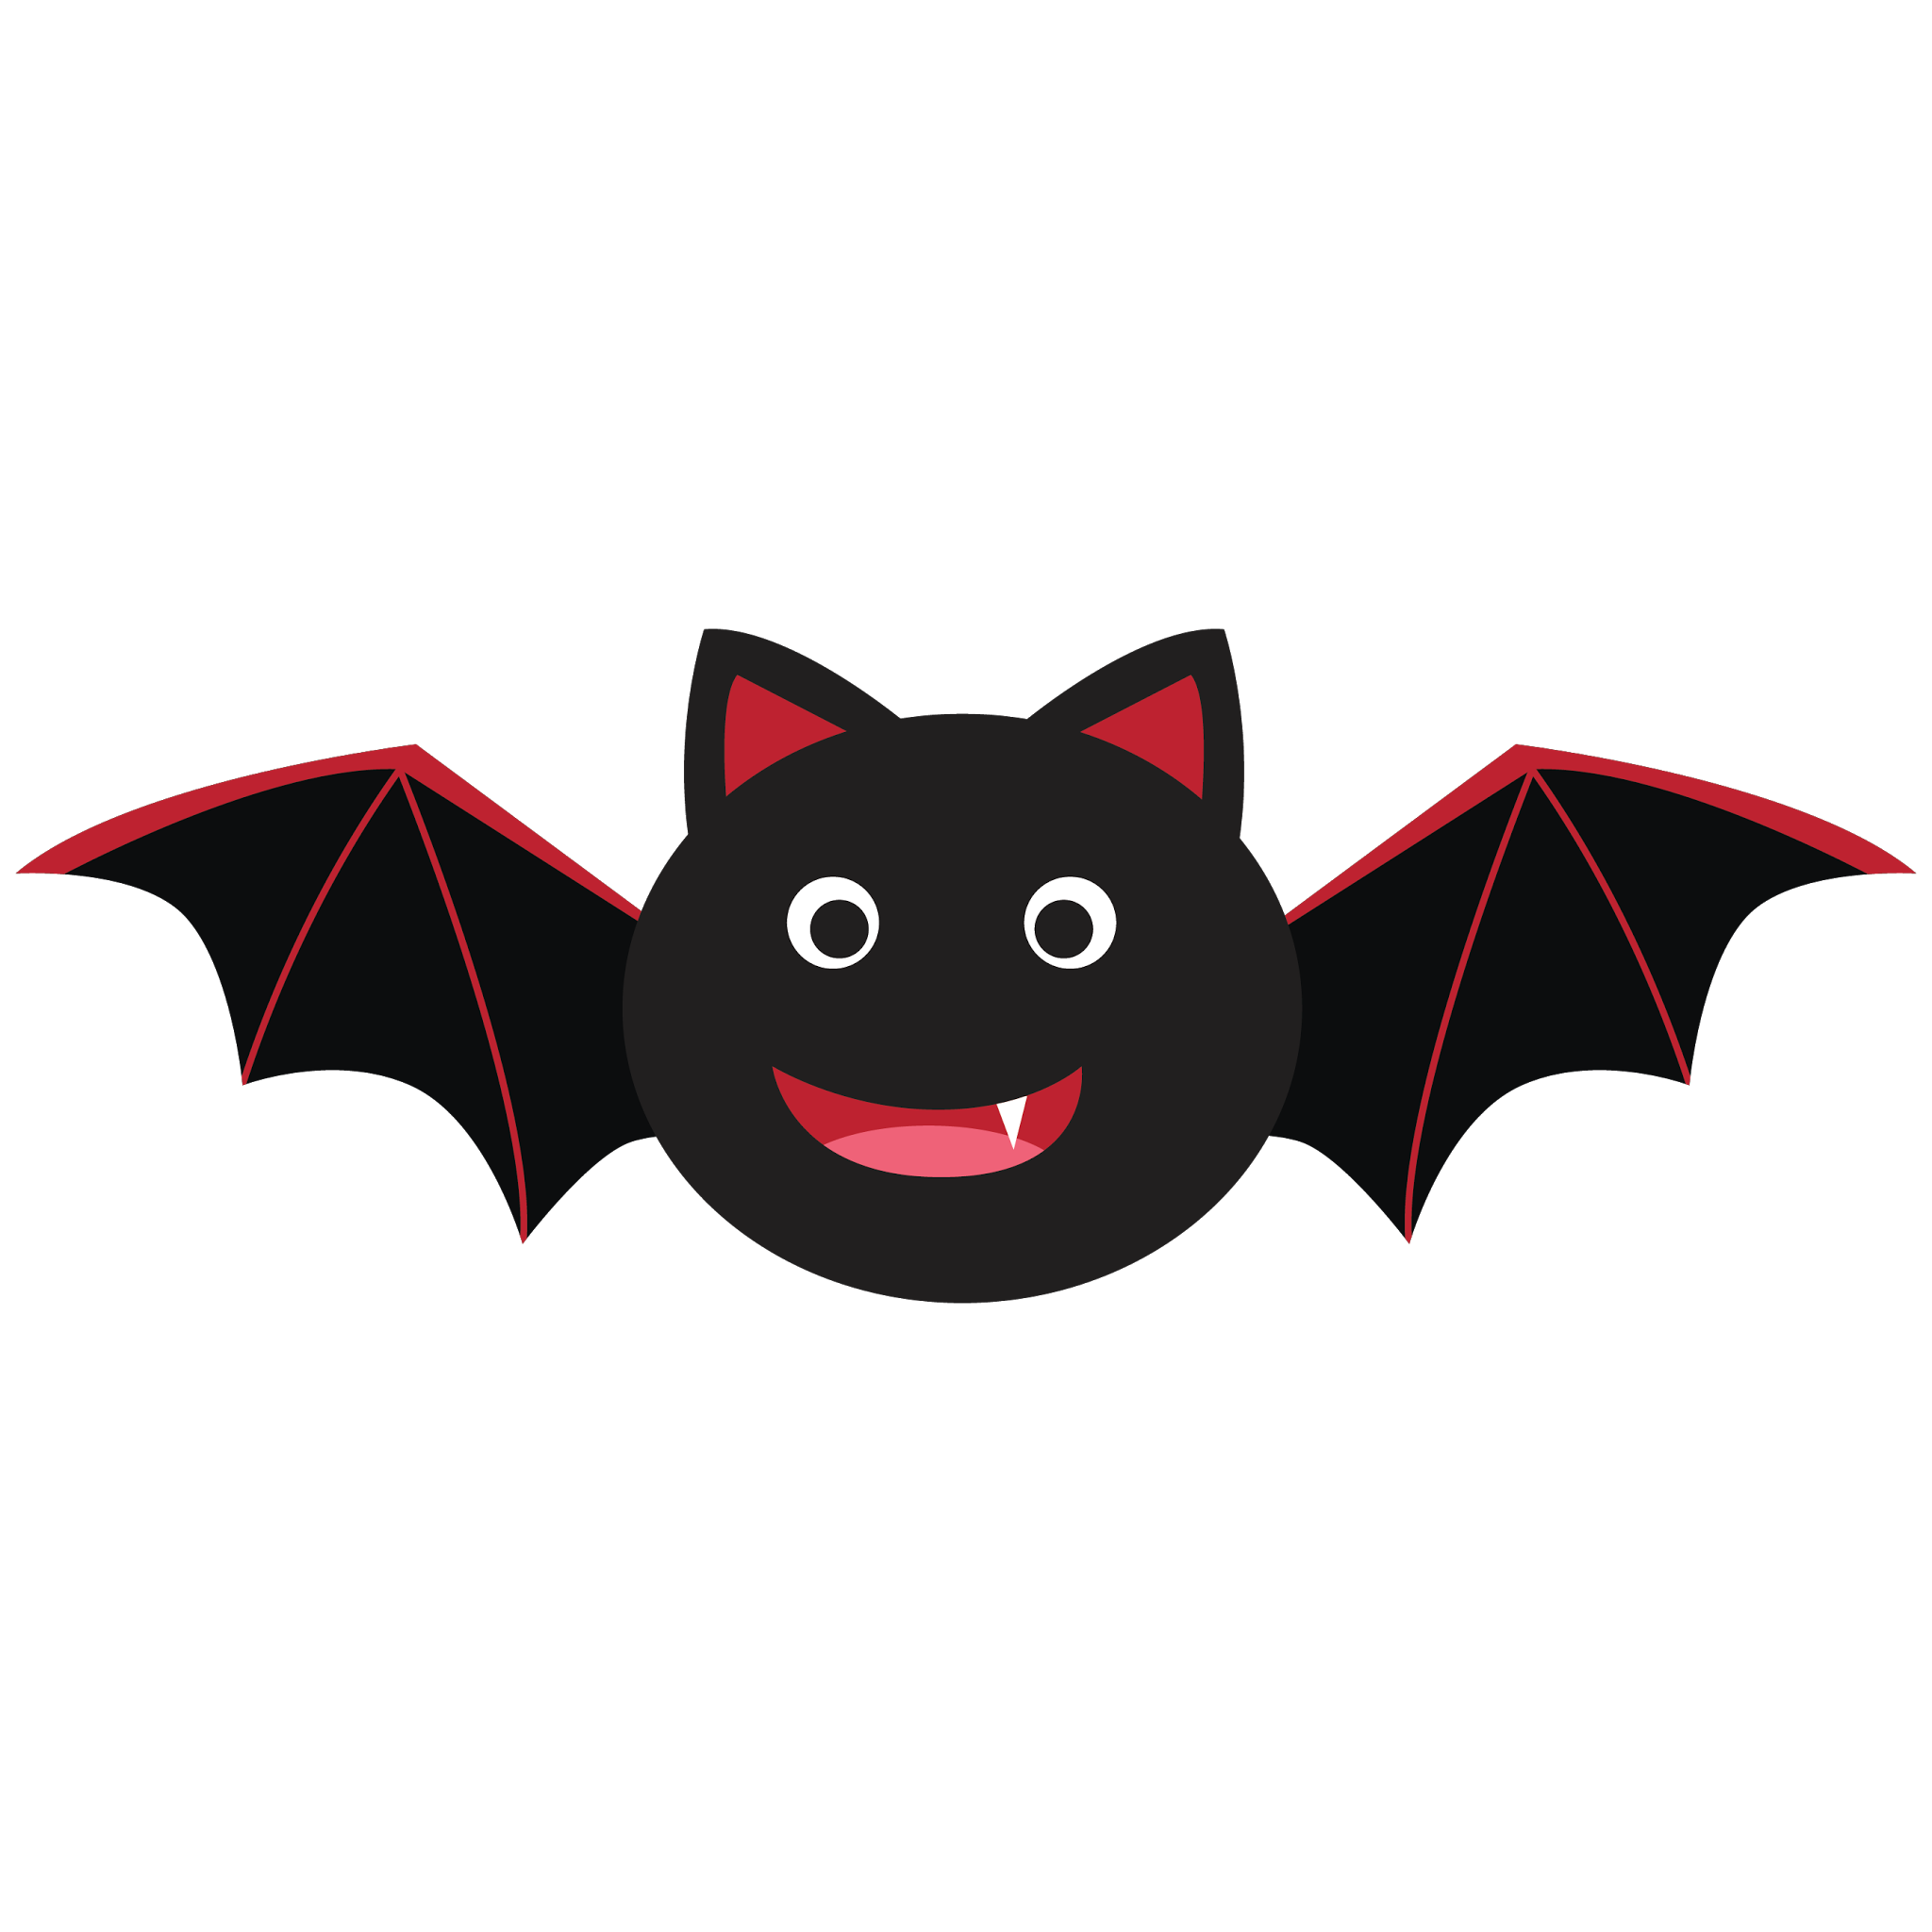 Cute halloween bat.